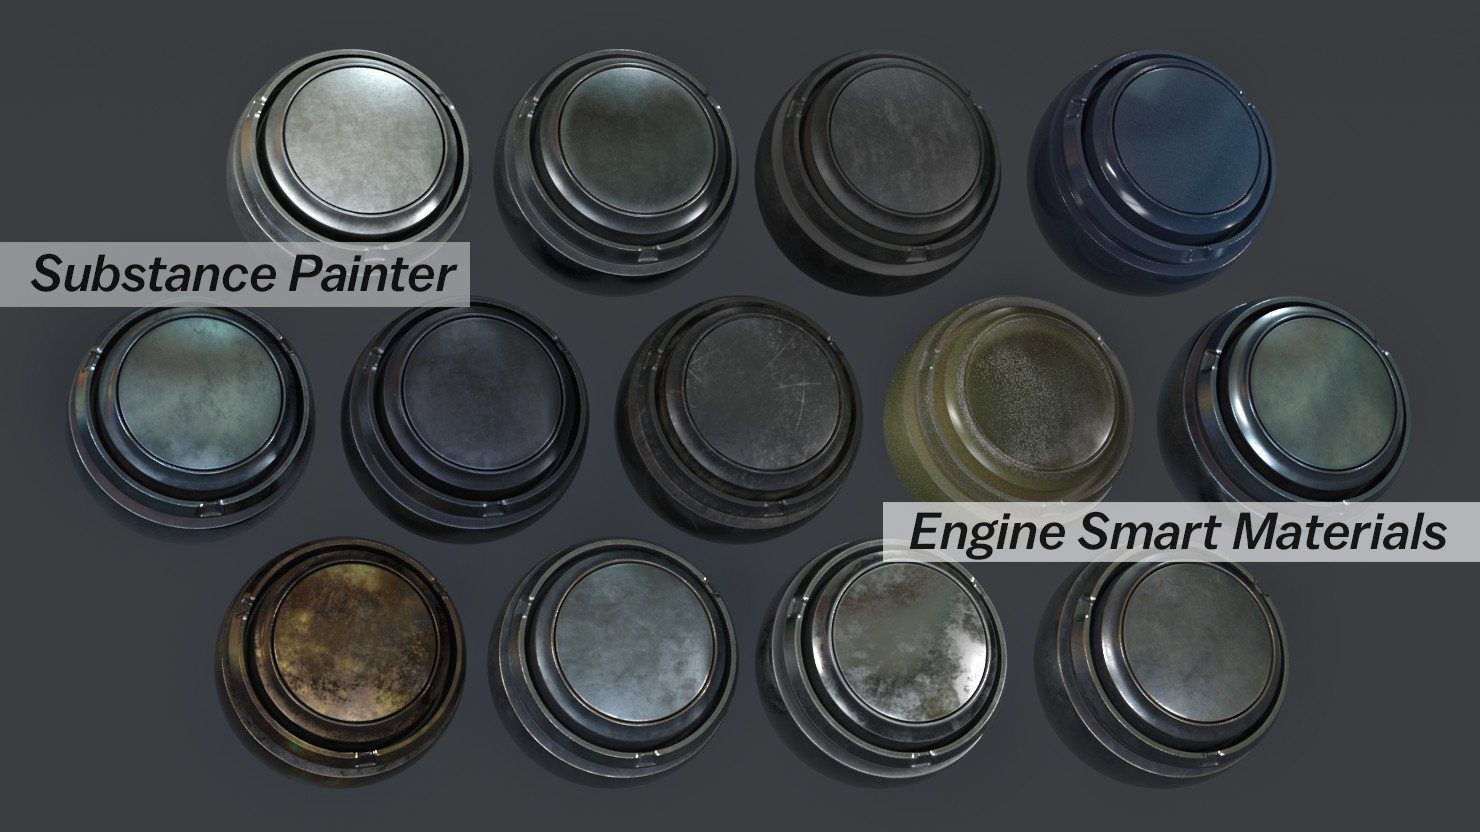 Artstation - 13 Substance Painter Engine Metal Automotive Smart Materials